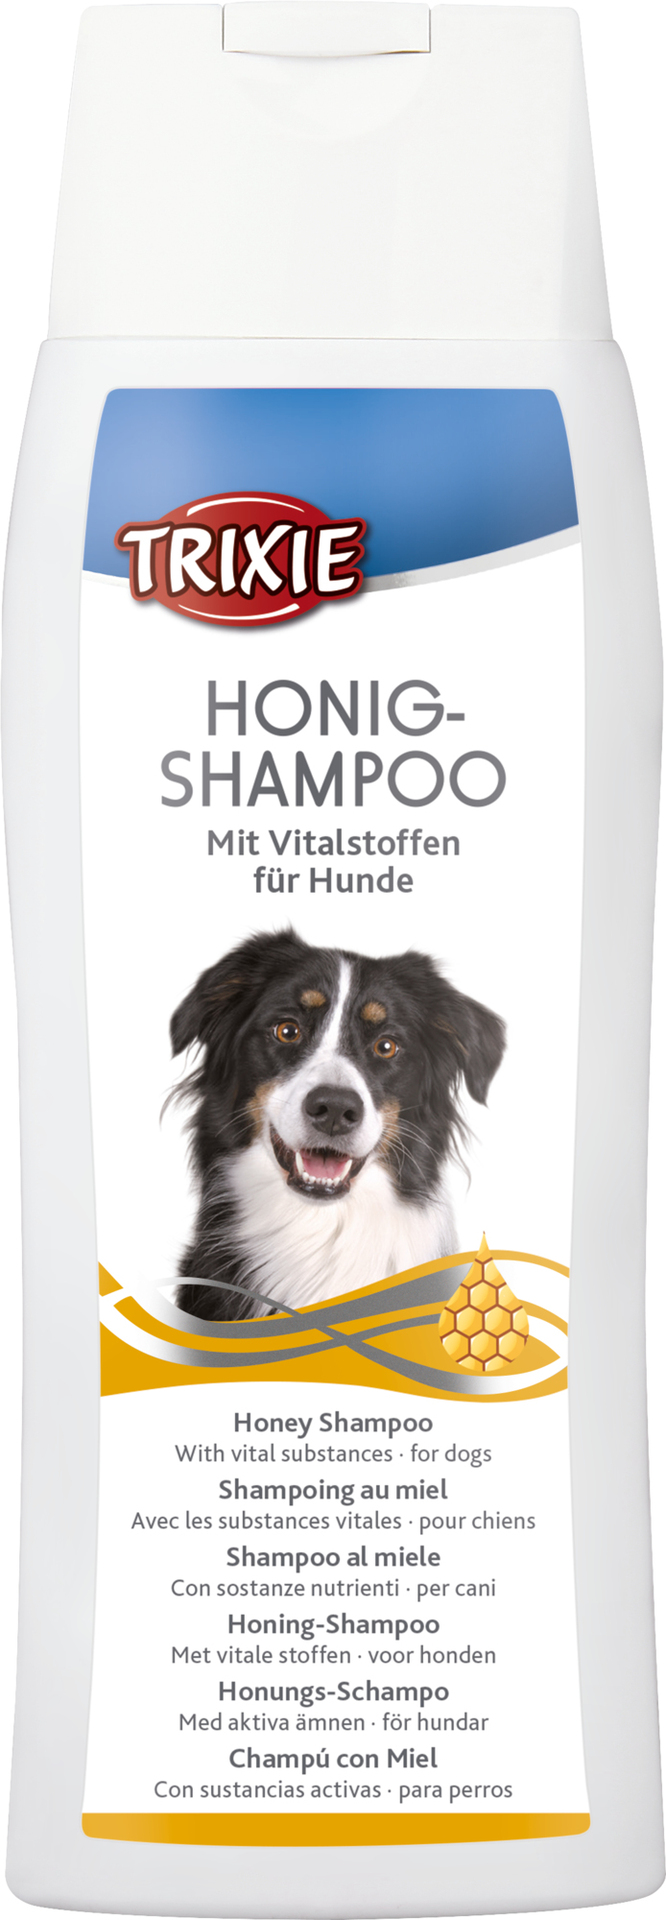 TRIXIE Honig-Shampoo